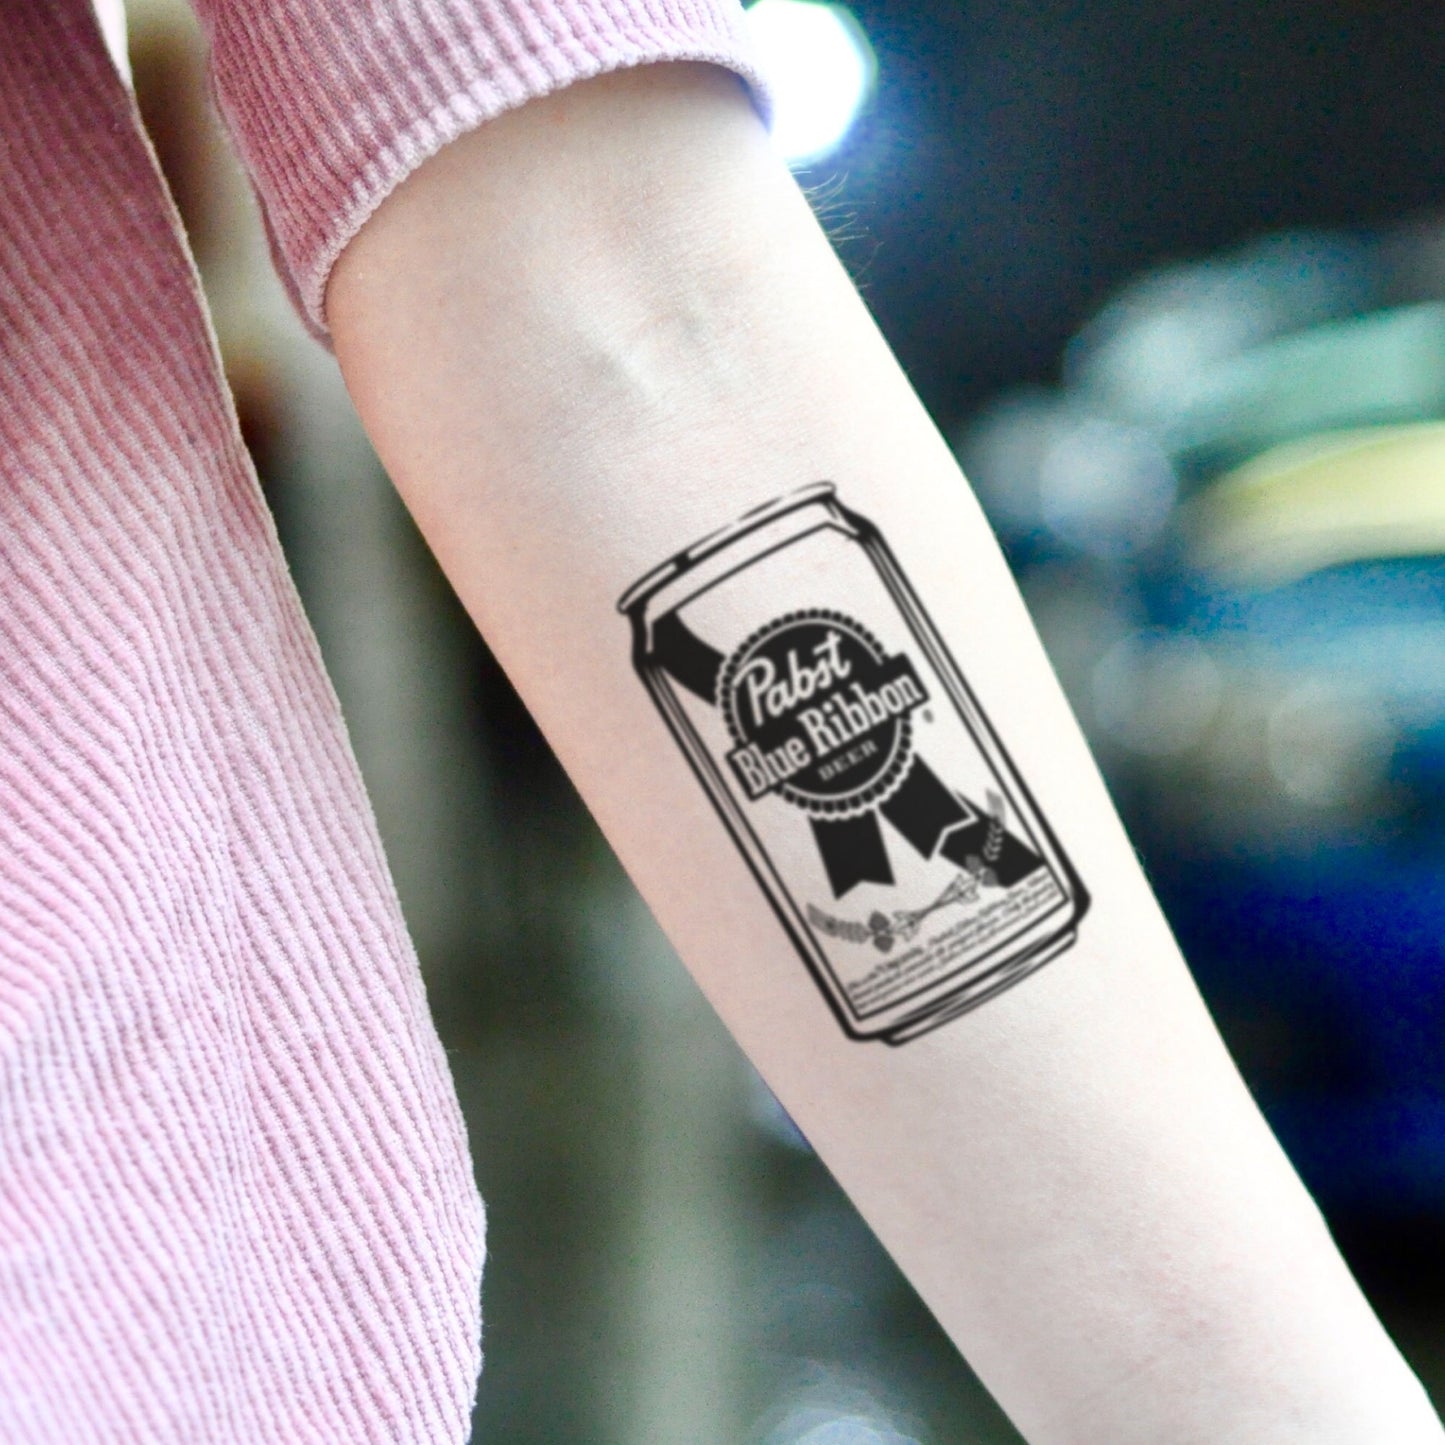 fake small pbr past blue ribbon beer food temporary tattoo sticker design idea on inner arm